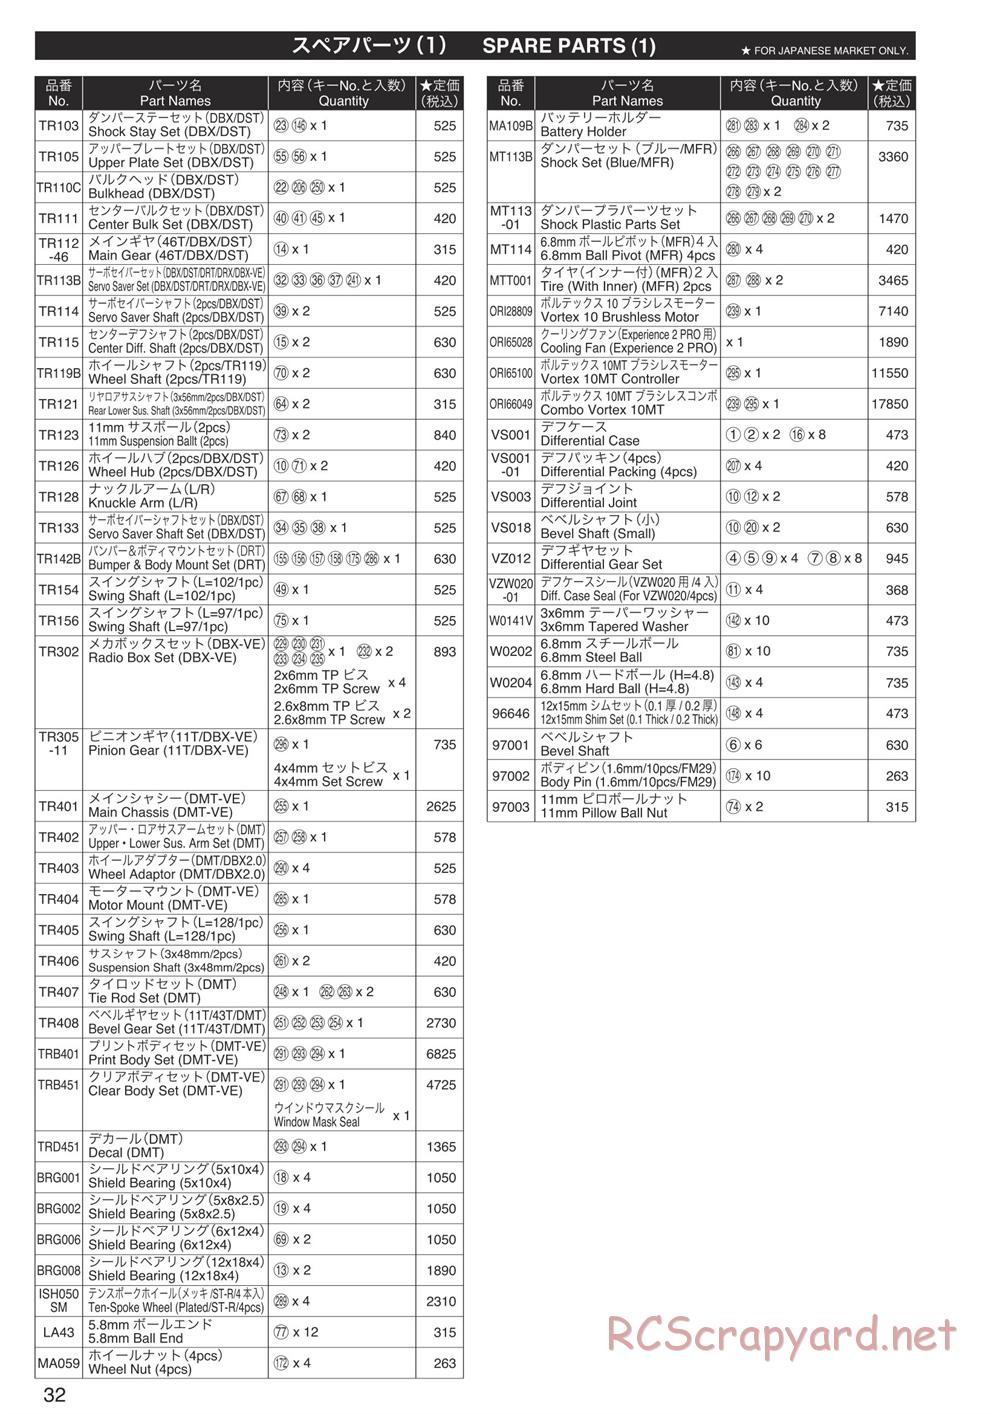 Kyosho - DMT-VE - Parts List - Page 1